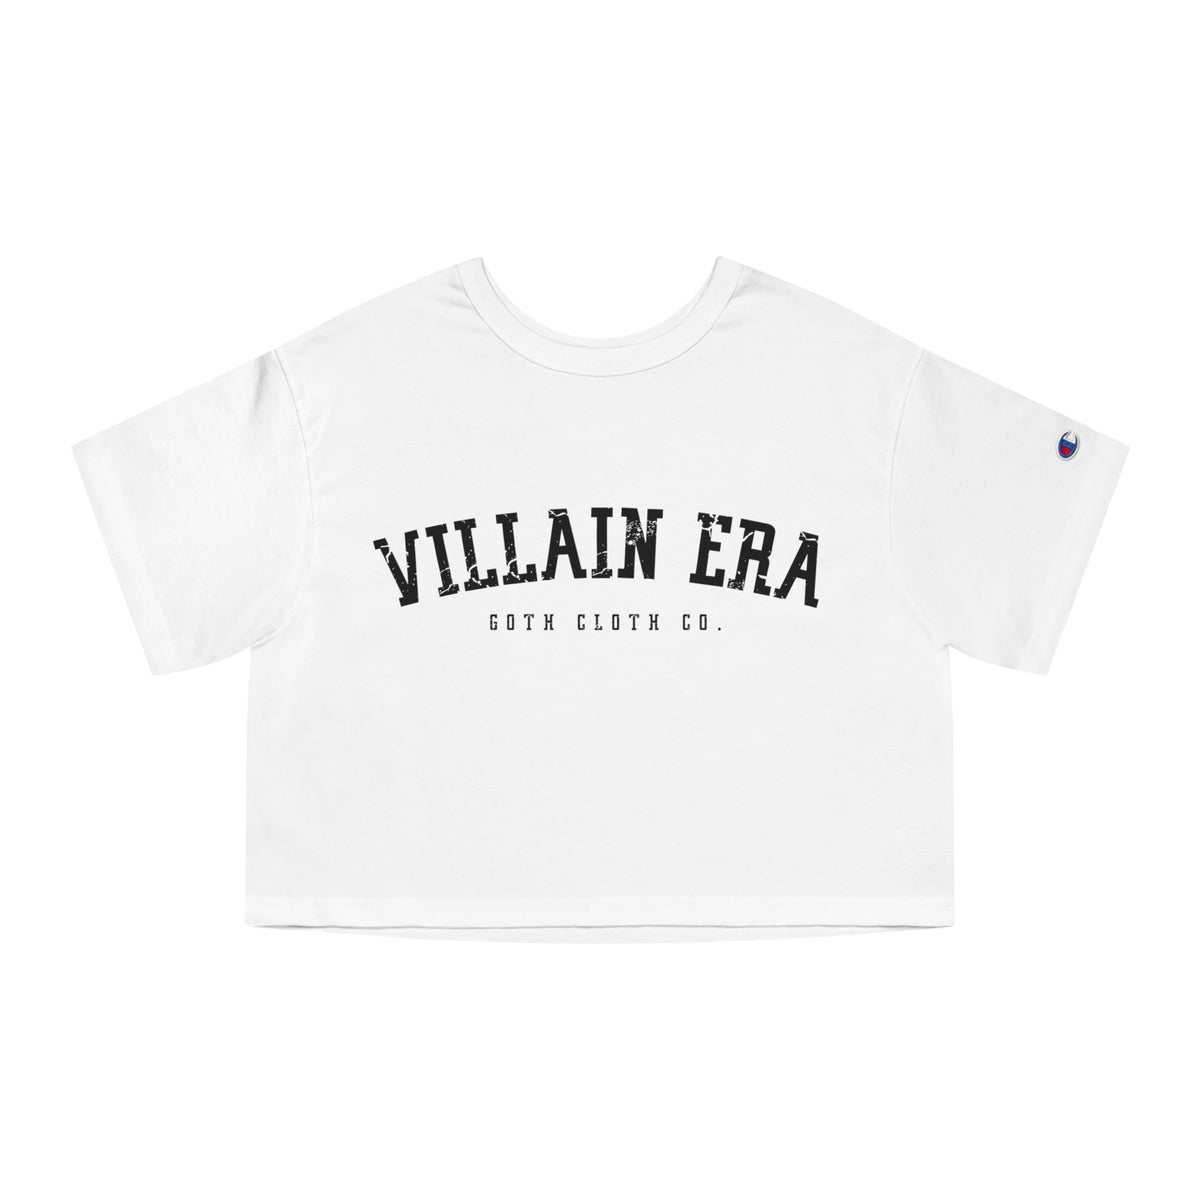 Villain Era Uni. Heavyweight Crop Top - Goth Cloth Co.T-Shirt19995489475561559715